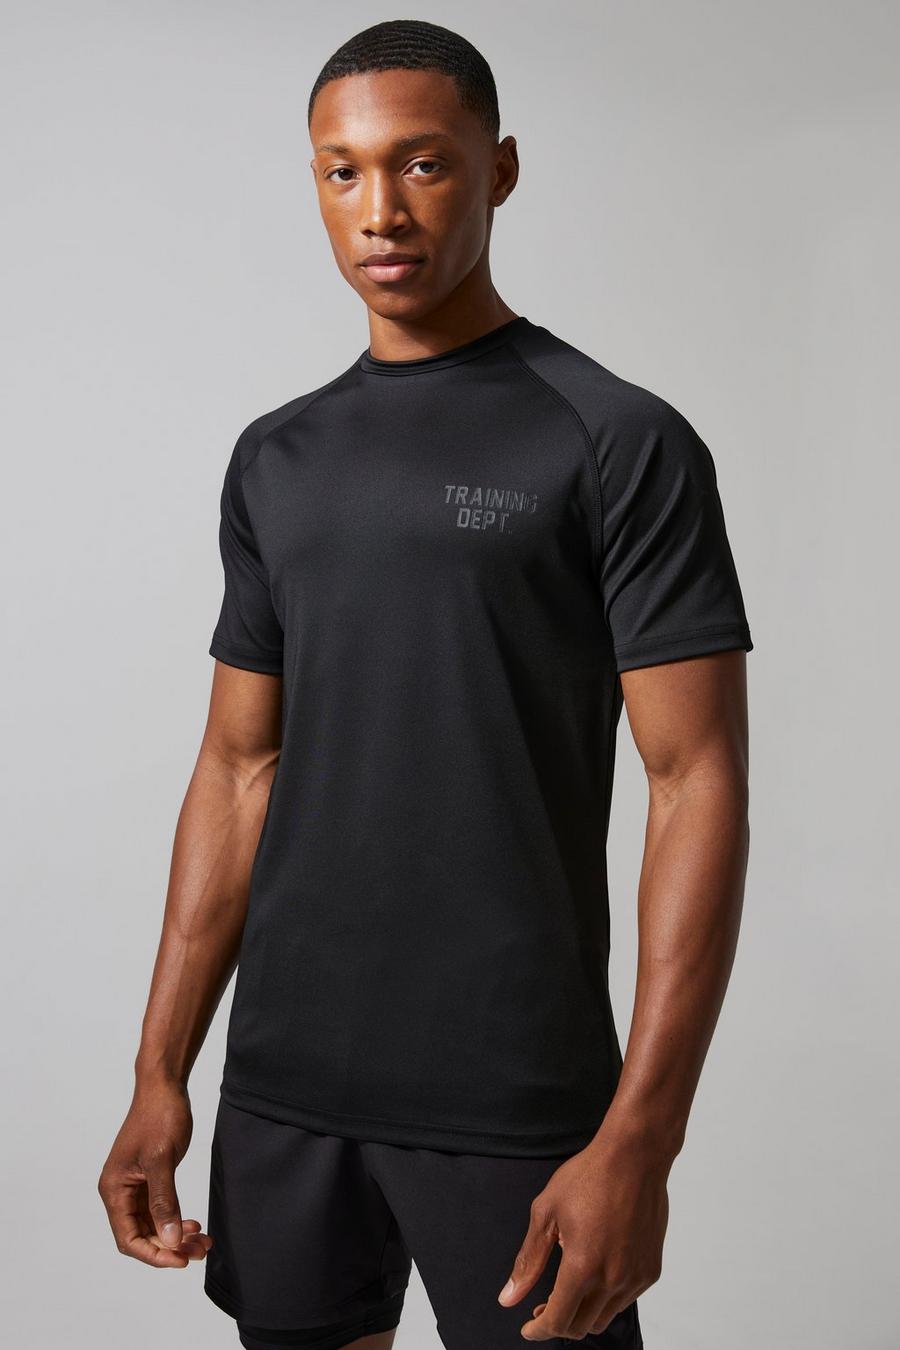 T-shirt attillata Man Active Training Dept, Black negro image number 1